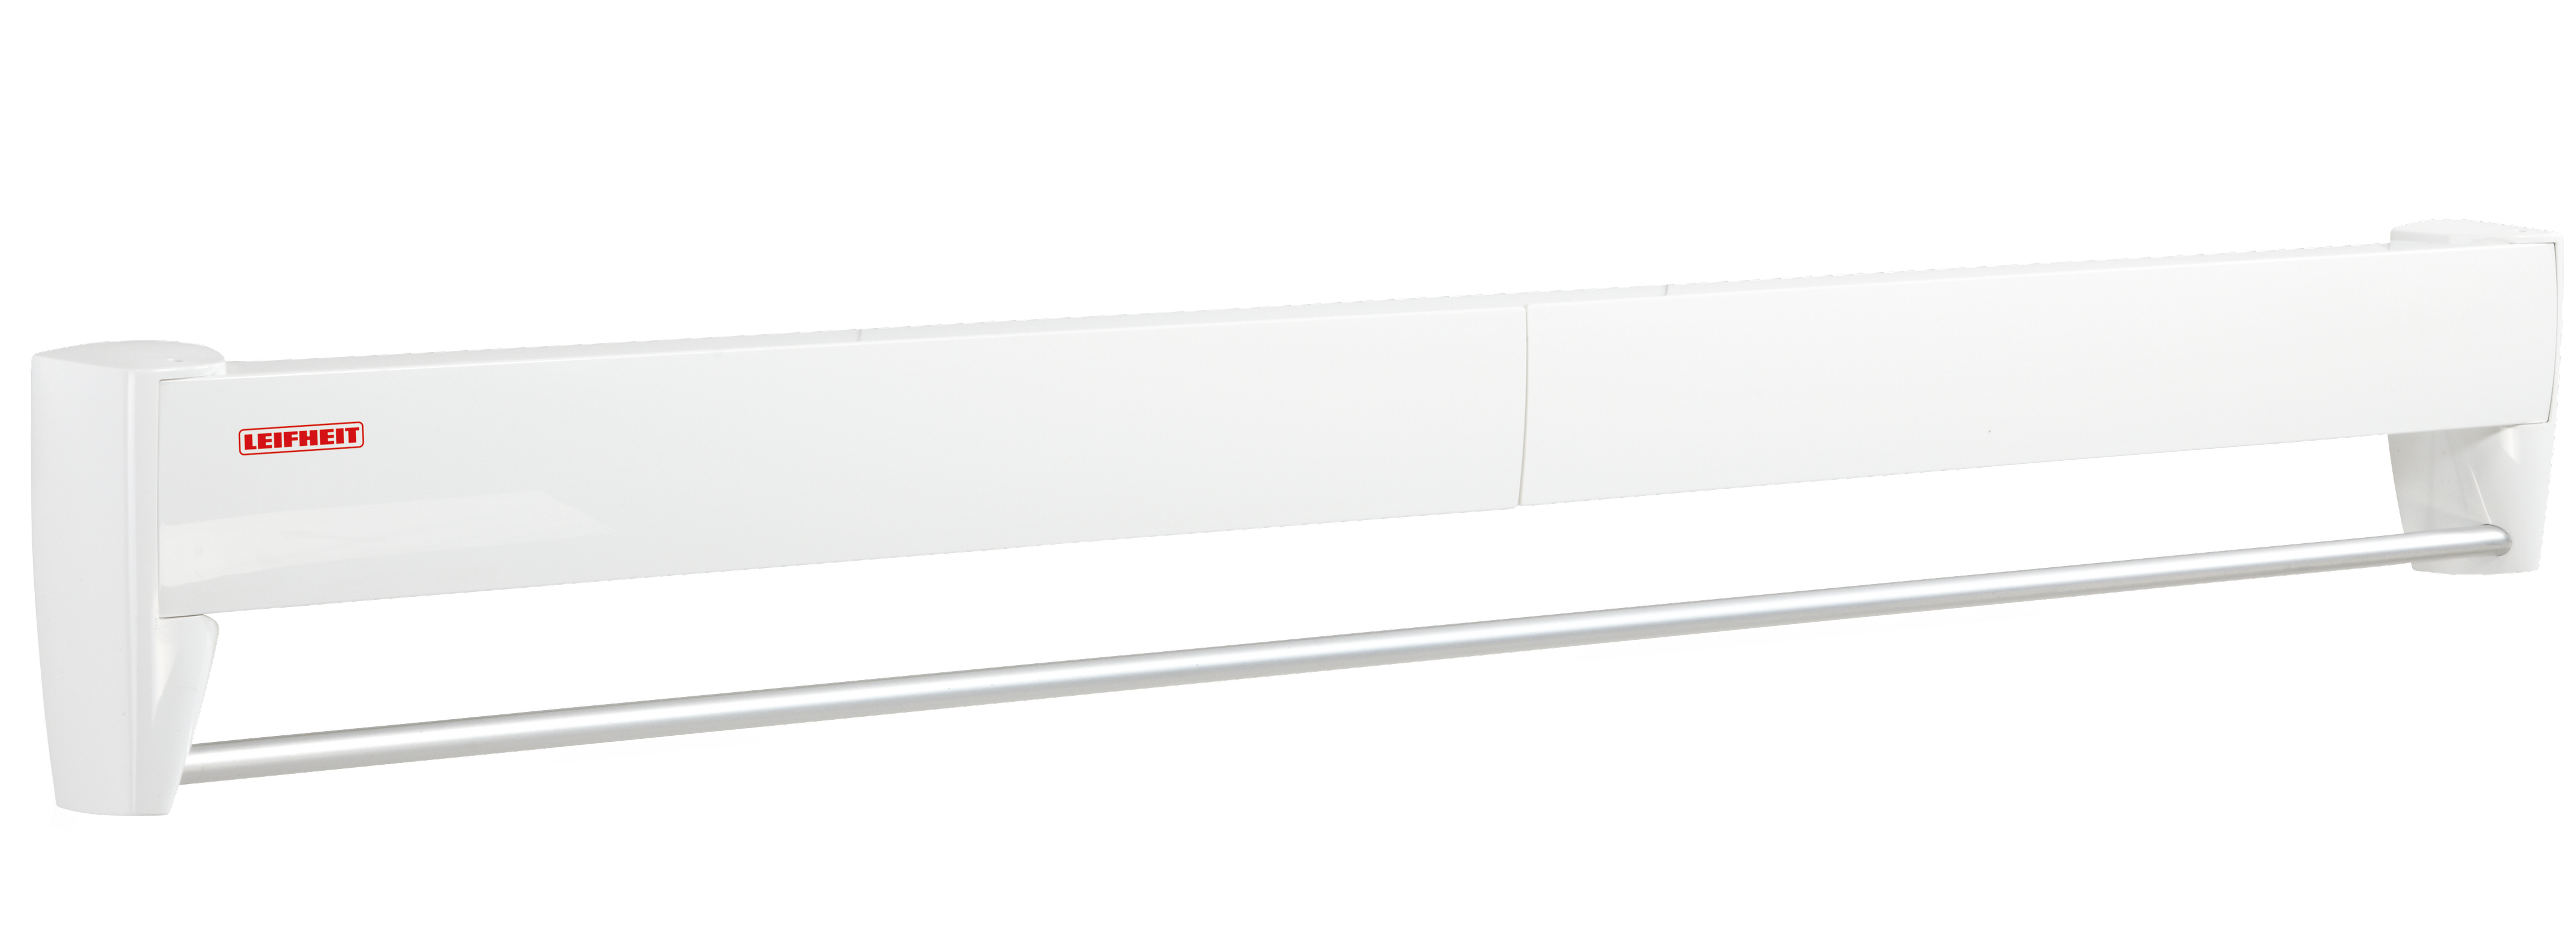 donante Cambiable Puro Tendedero barras extensible para pared de plástico de 103x12x6 cm | Leroy  Merlin